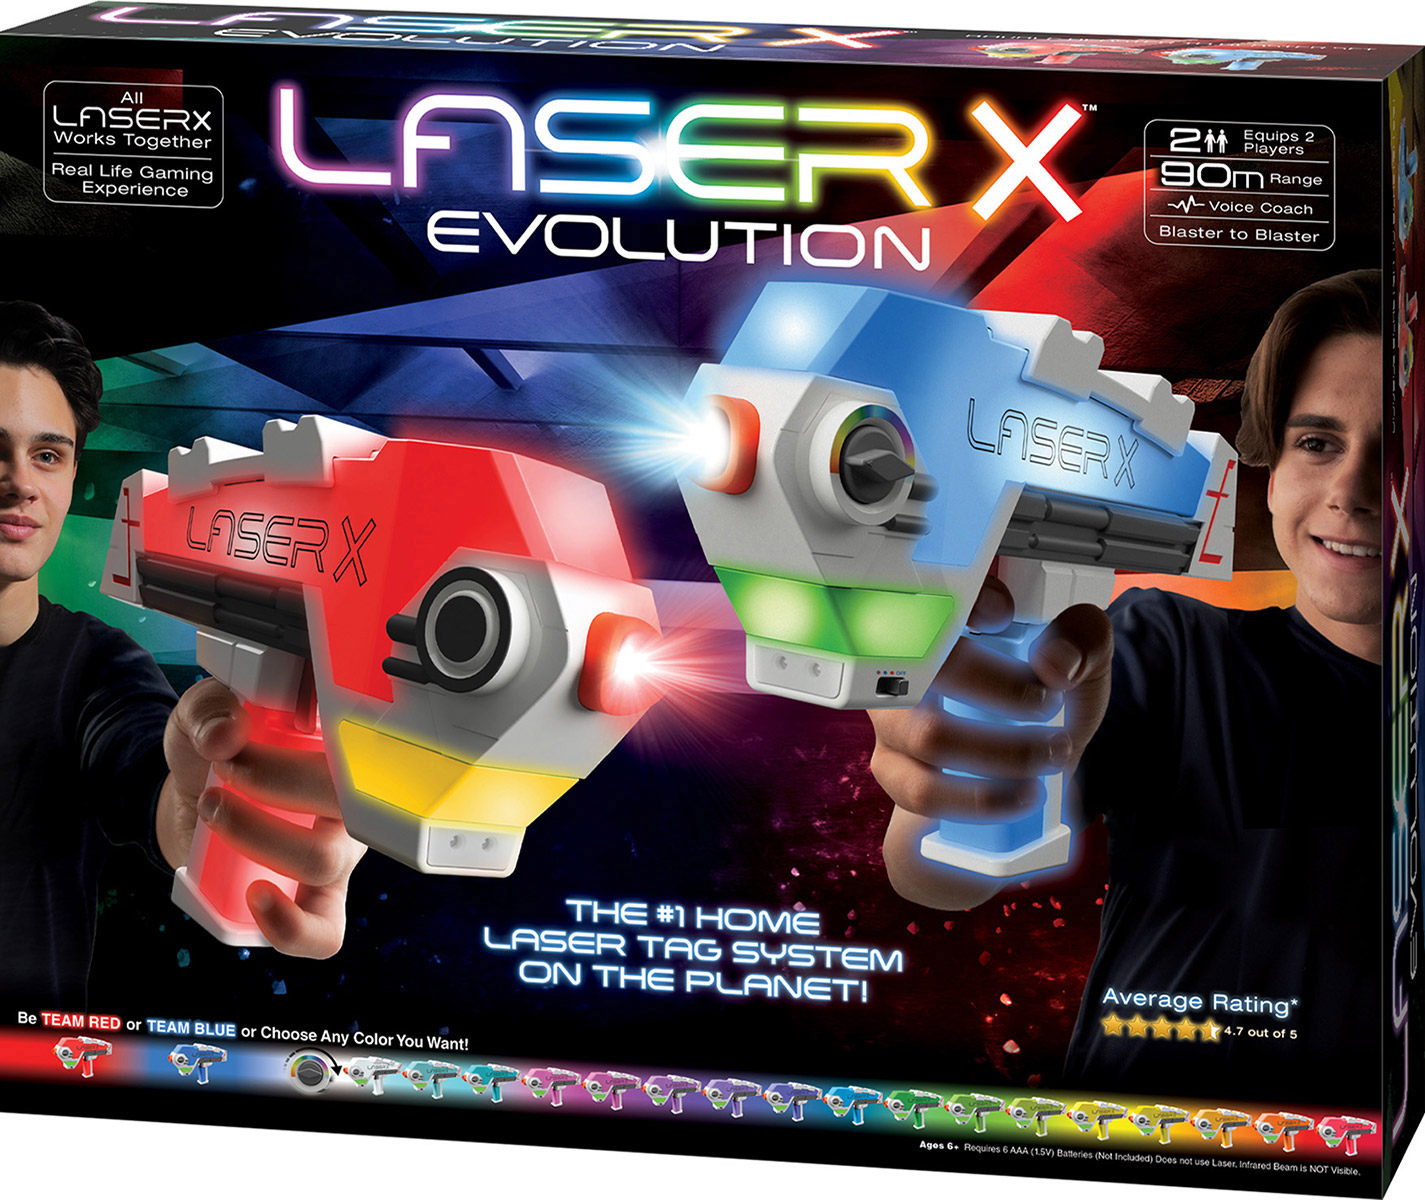 Laser X Ultra - Hunter Leisure